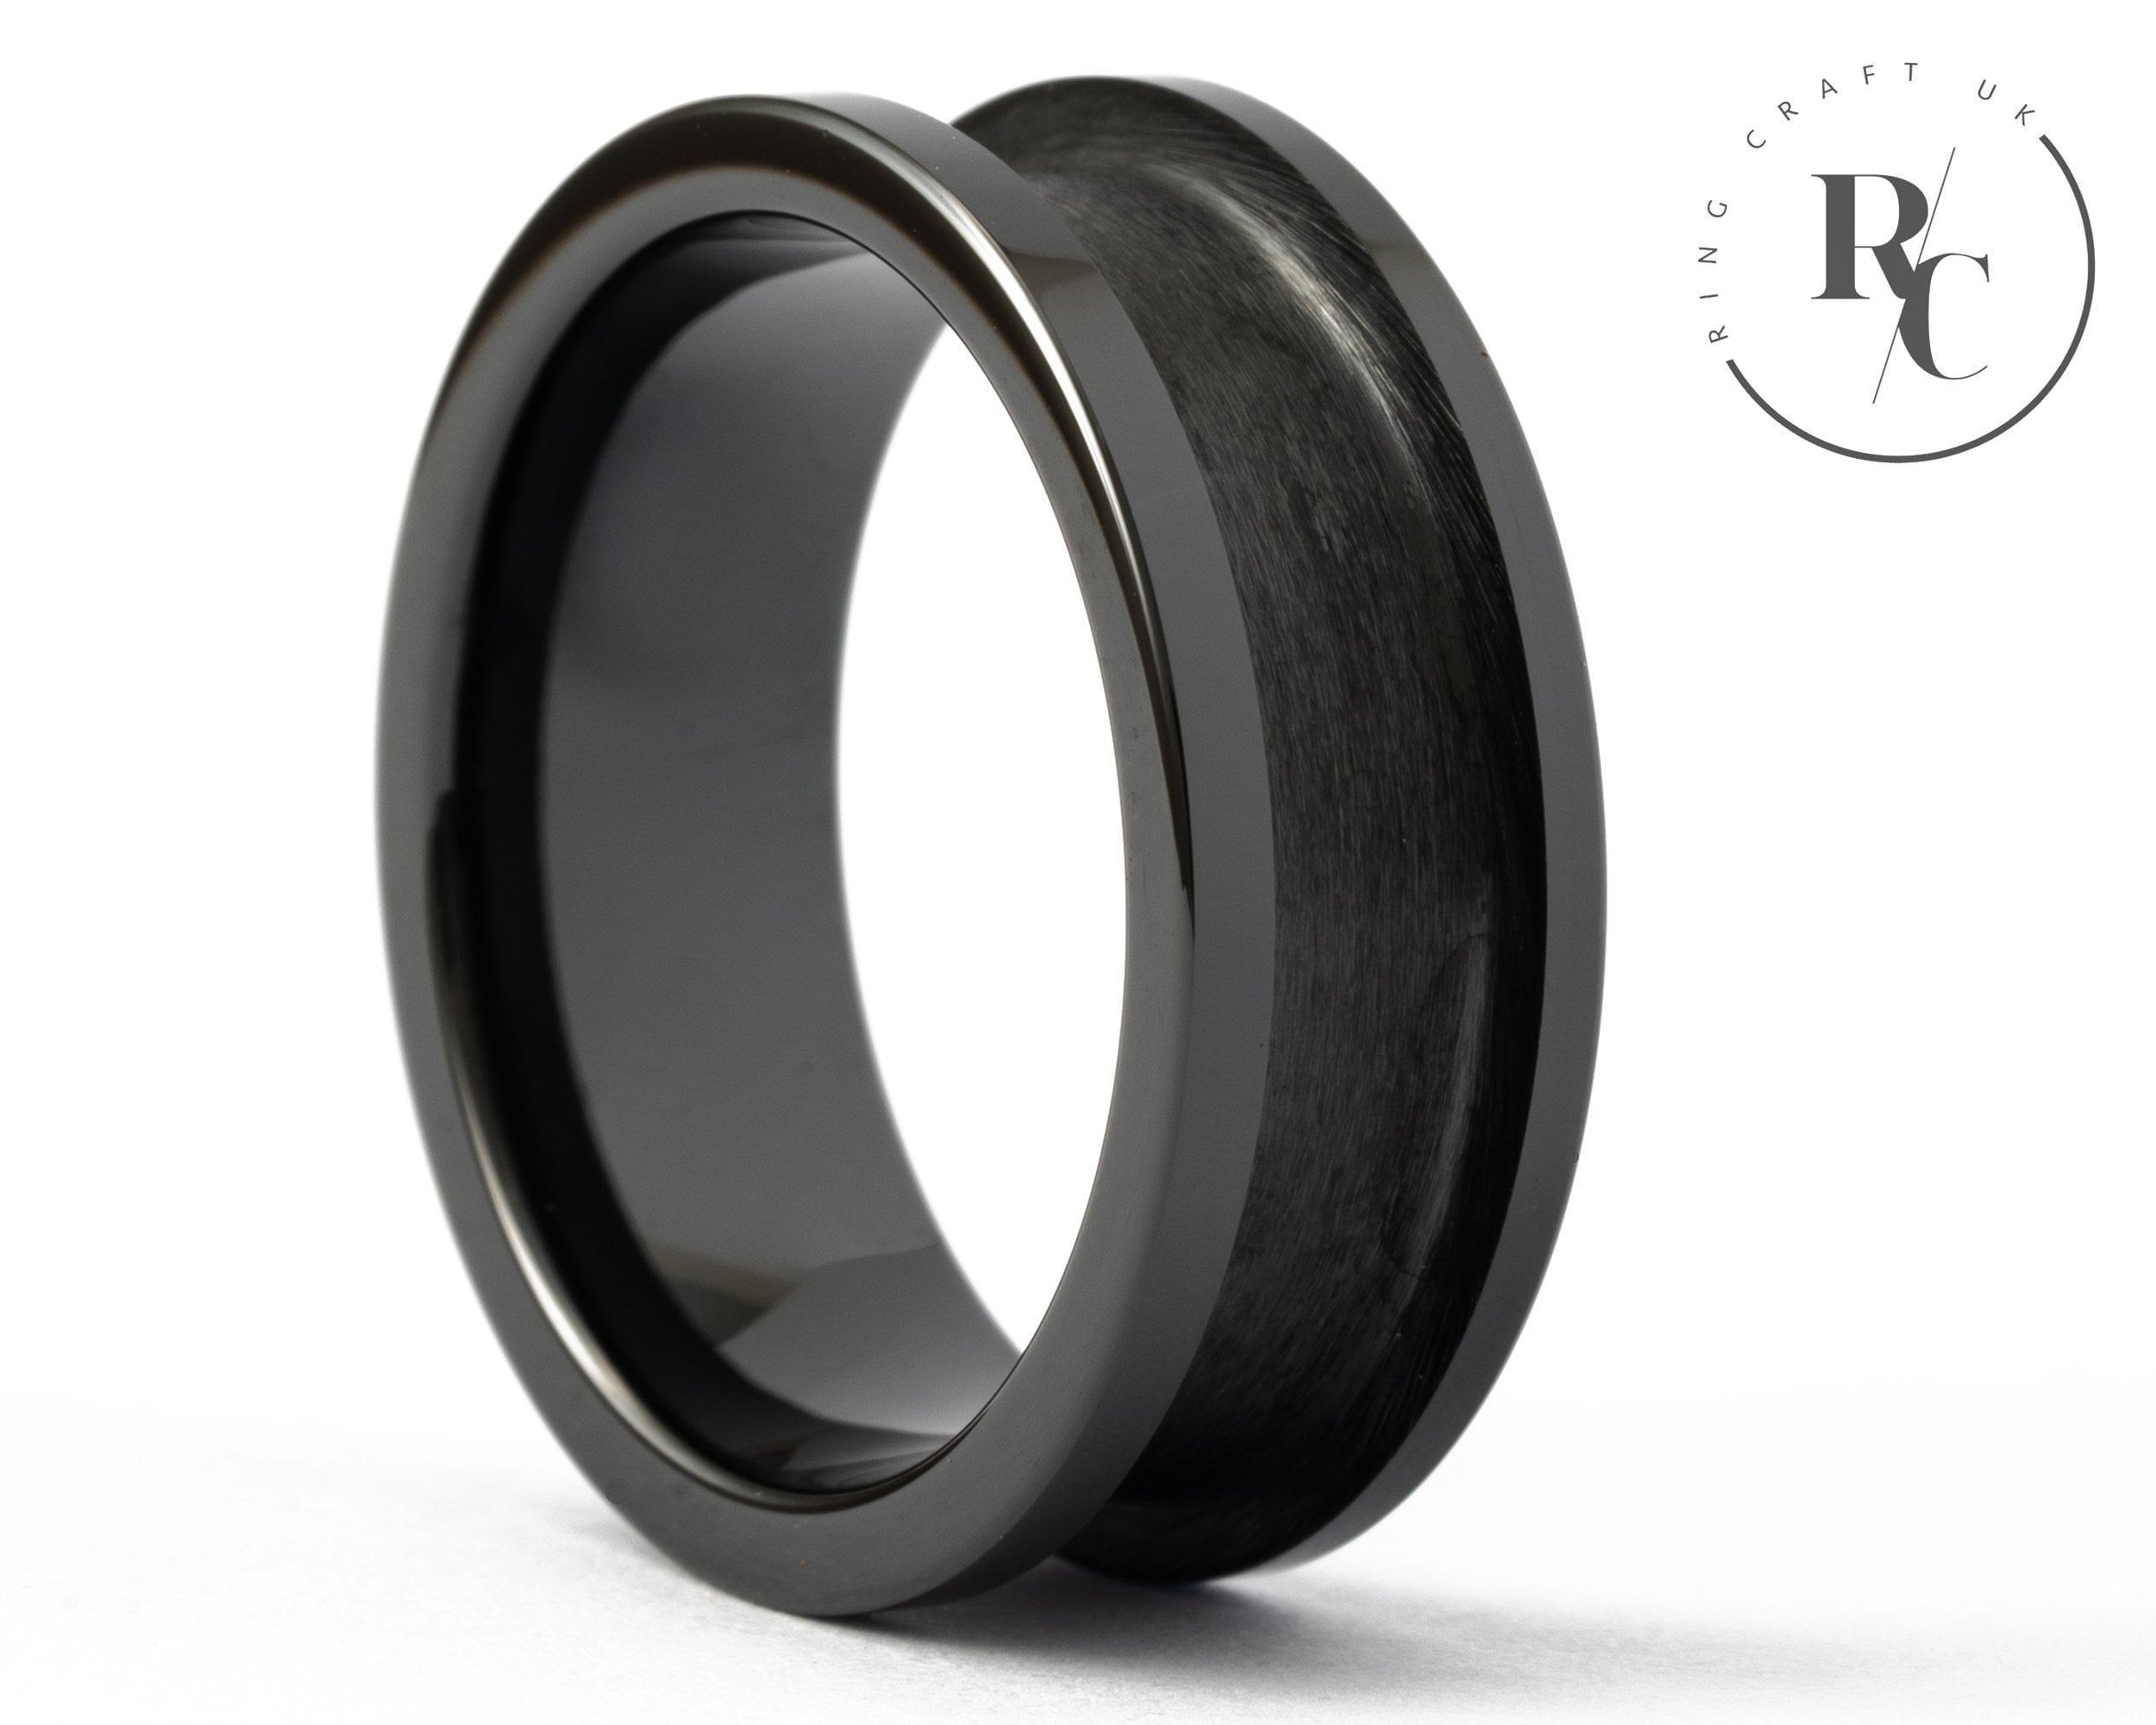 Black Etsy Ring Ceramic -